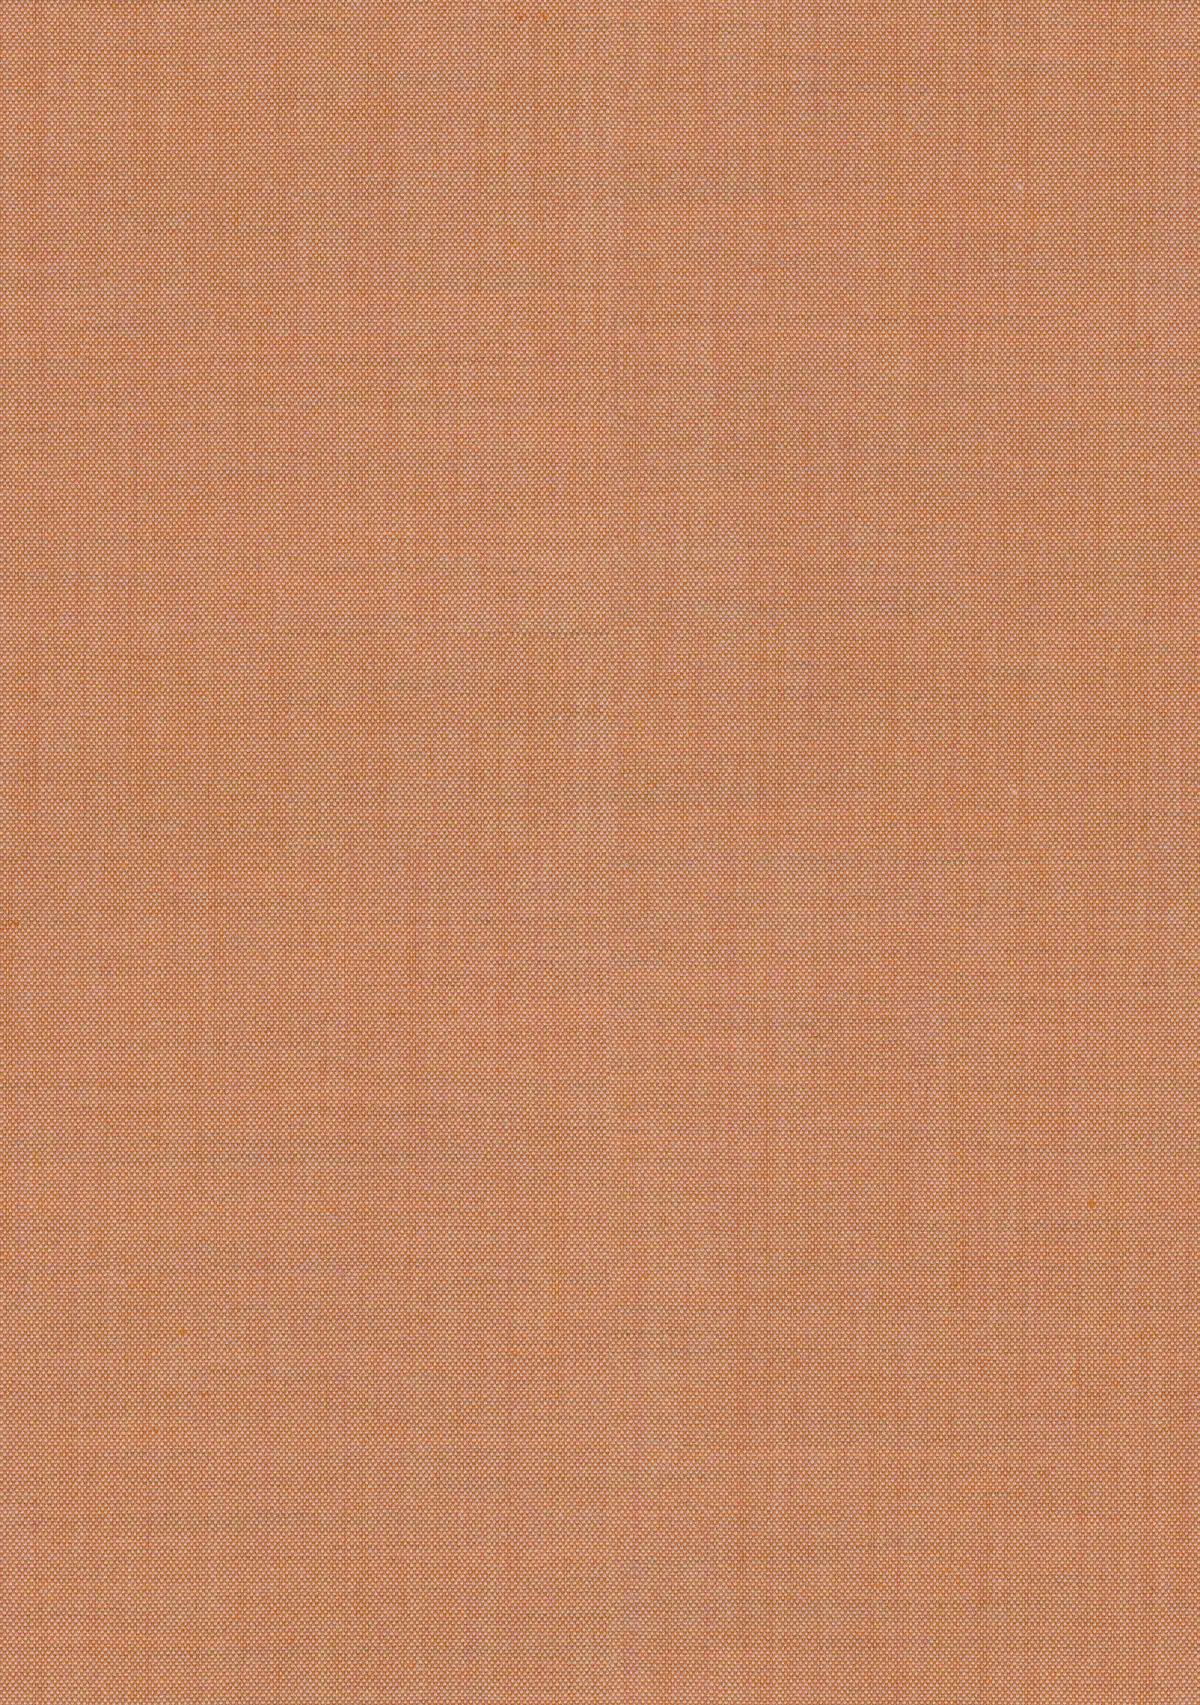 Fabric sample Remix 3 516 orange